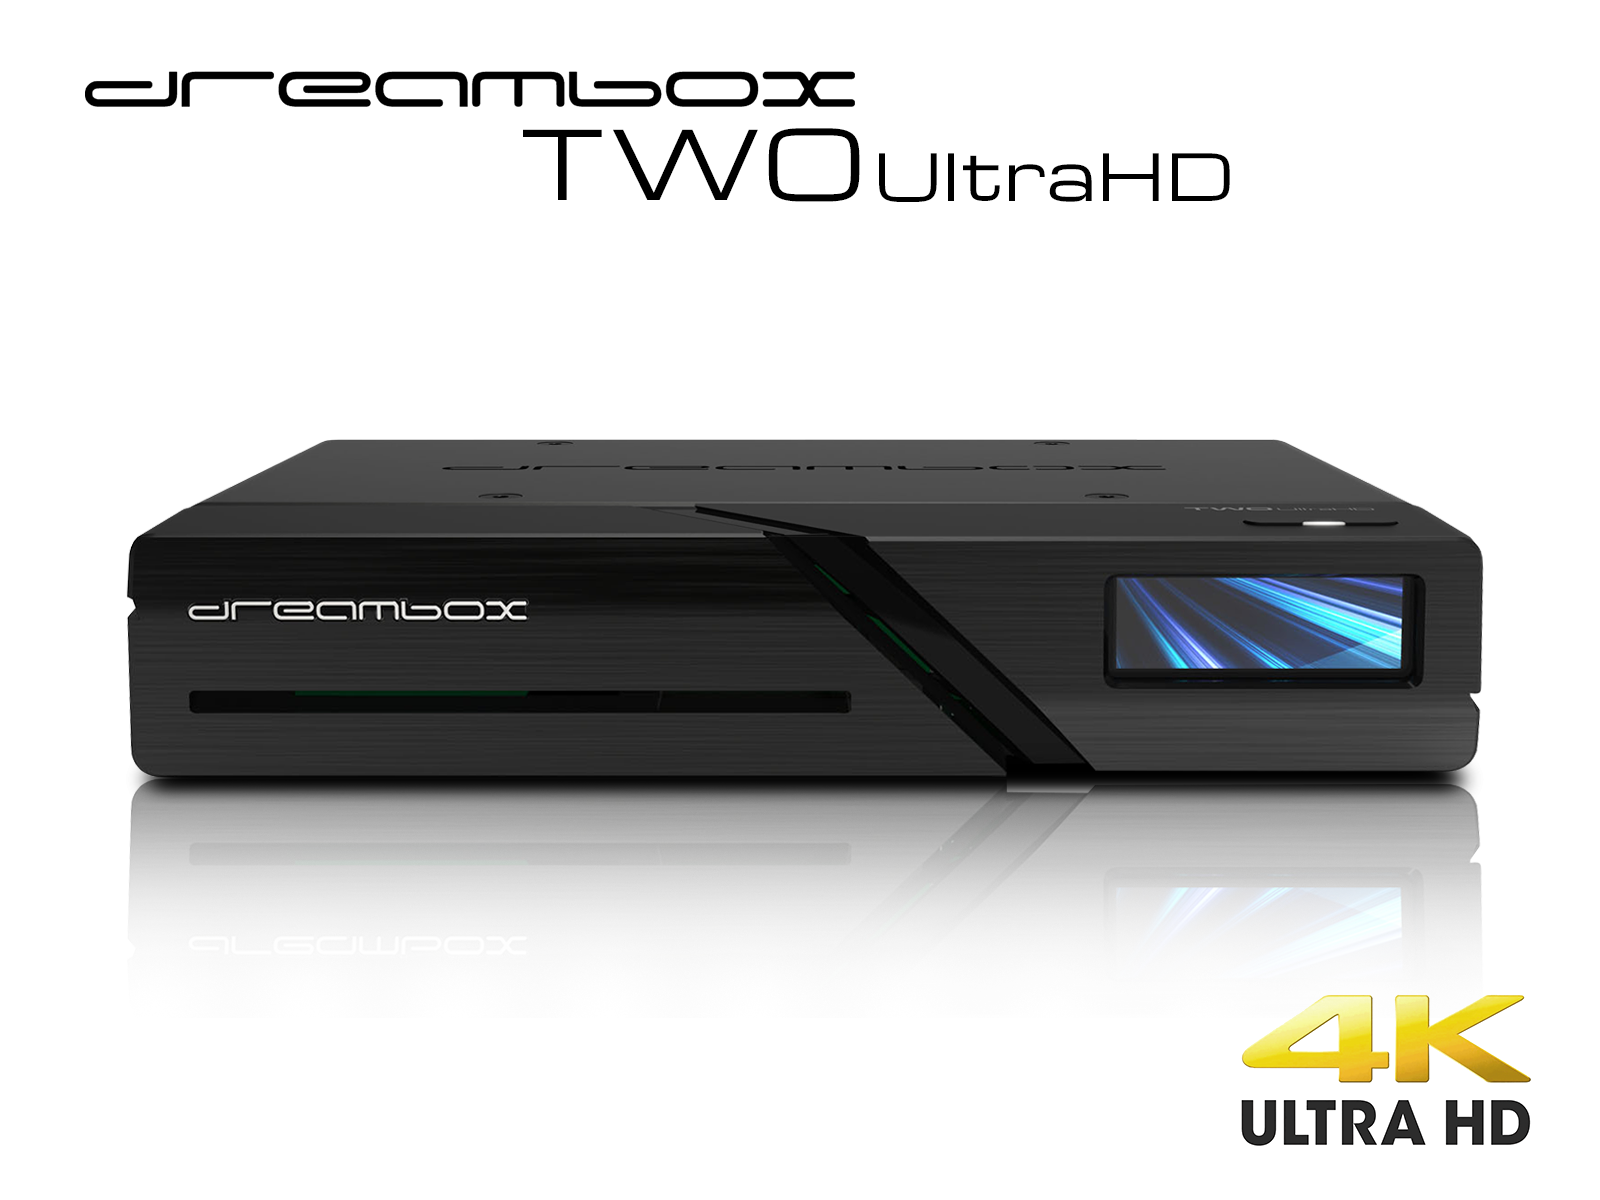 Dreambox Two Ultra HD 2x DVB-S2X MIS Tuner 4K 2160p E2 Linux Dual Wifi H.265 HEVC